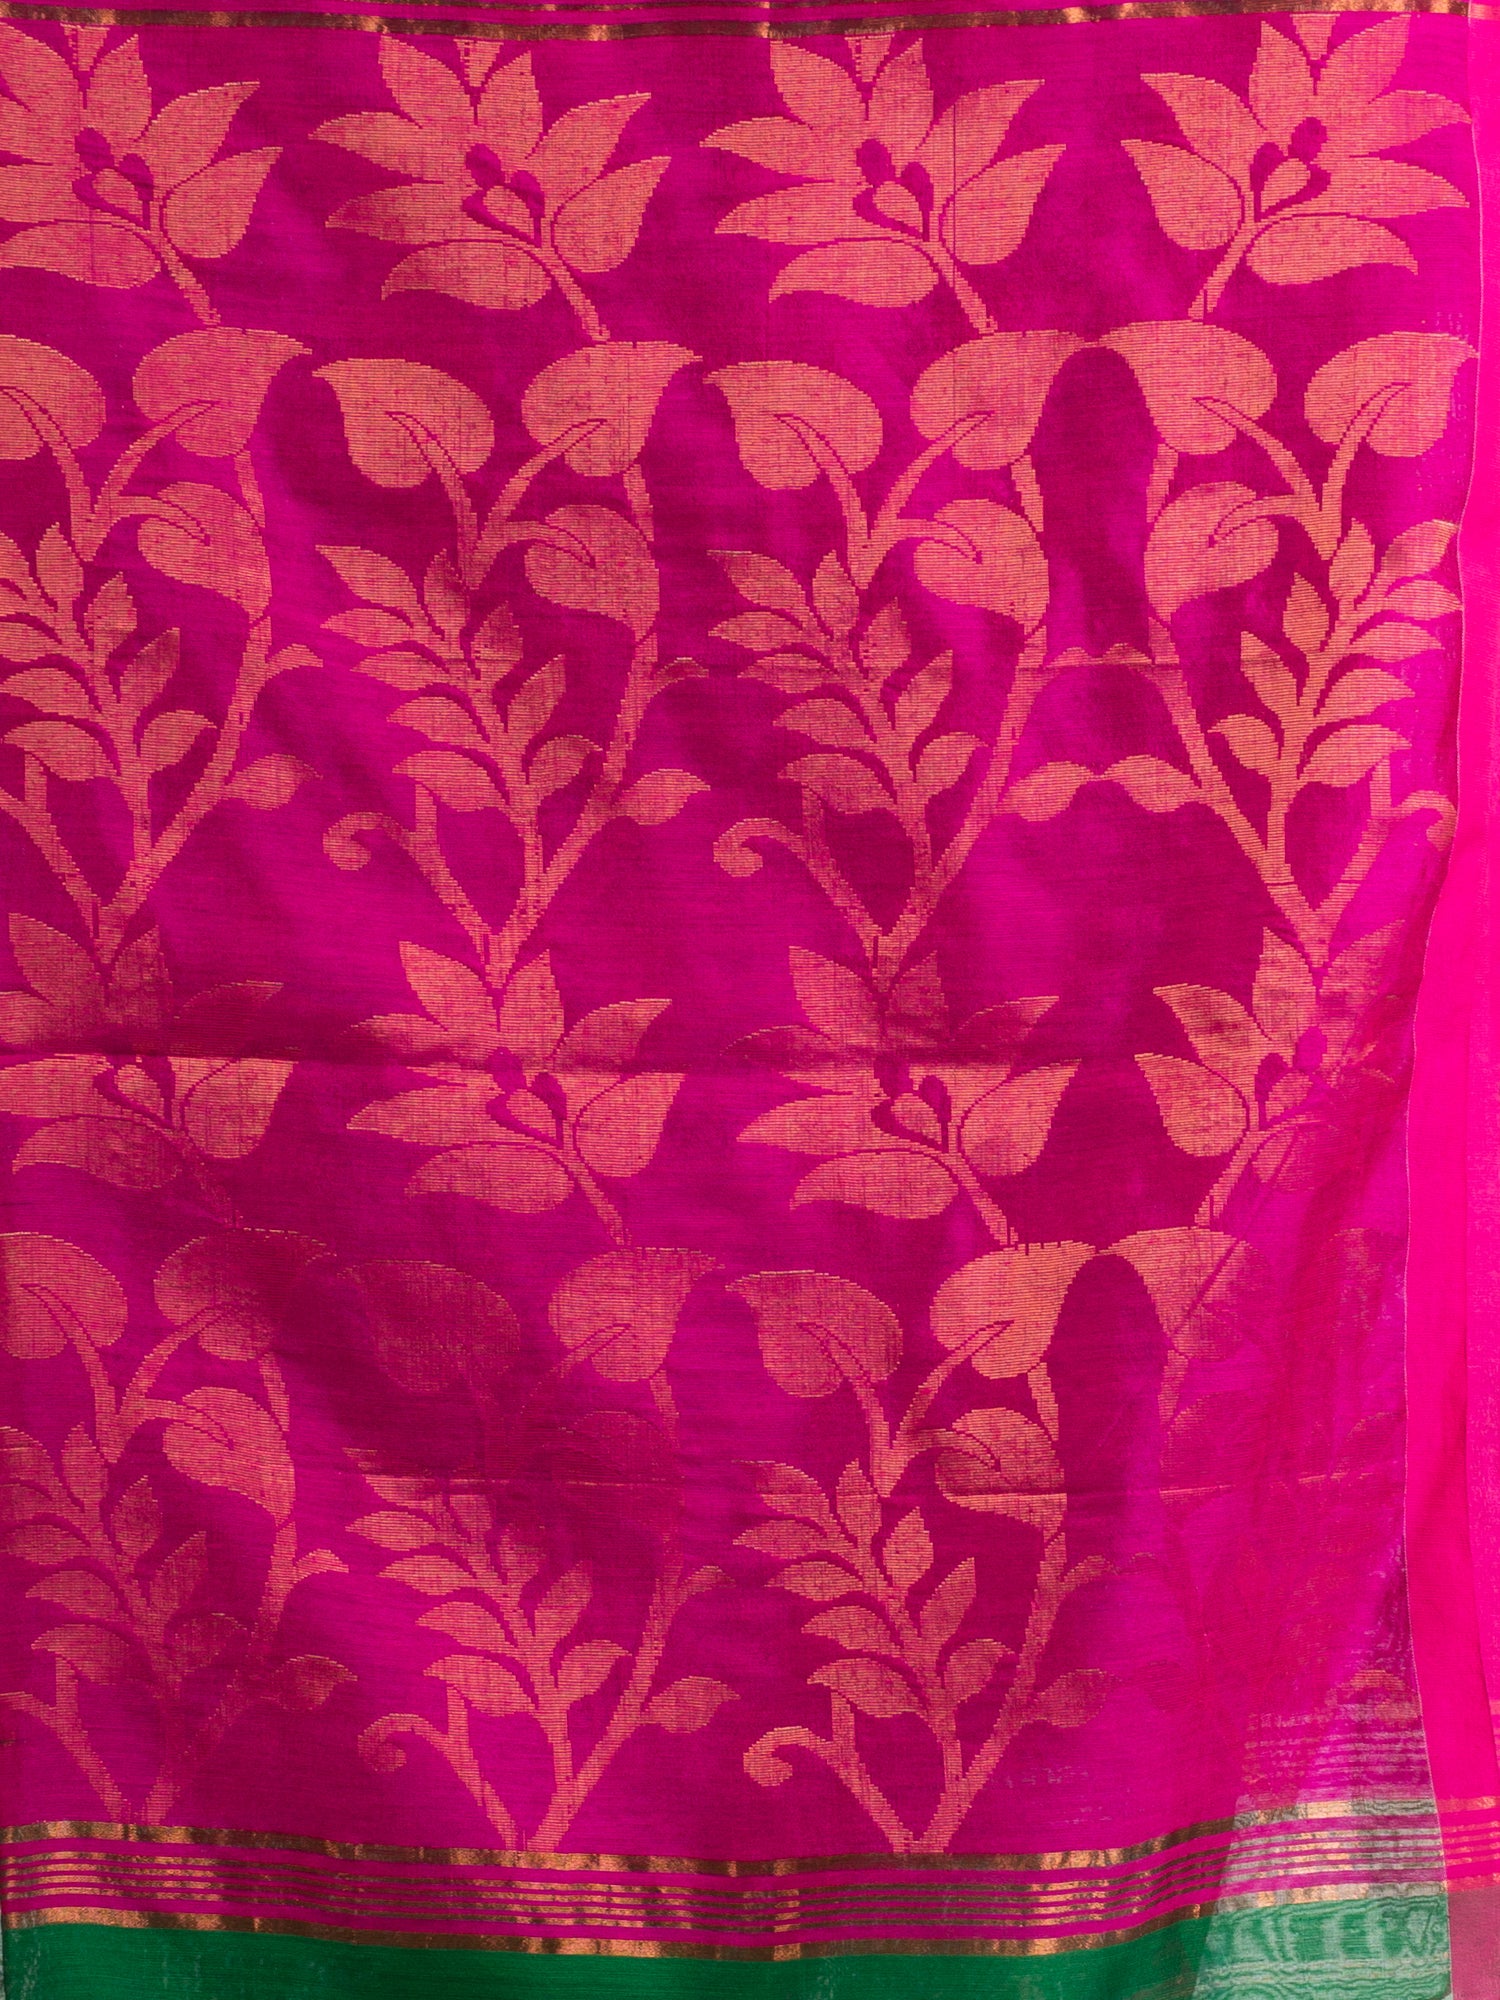 Women's Green Cotton Blend Handloom Tangail Saree - Angoshobha